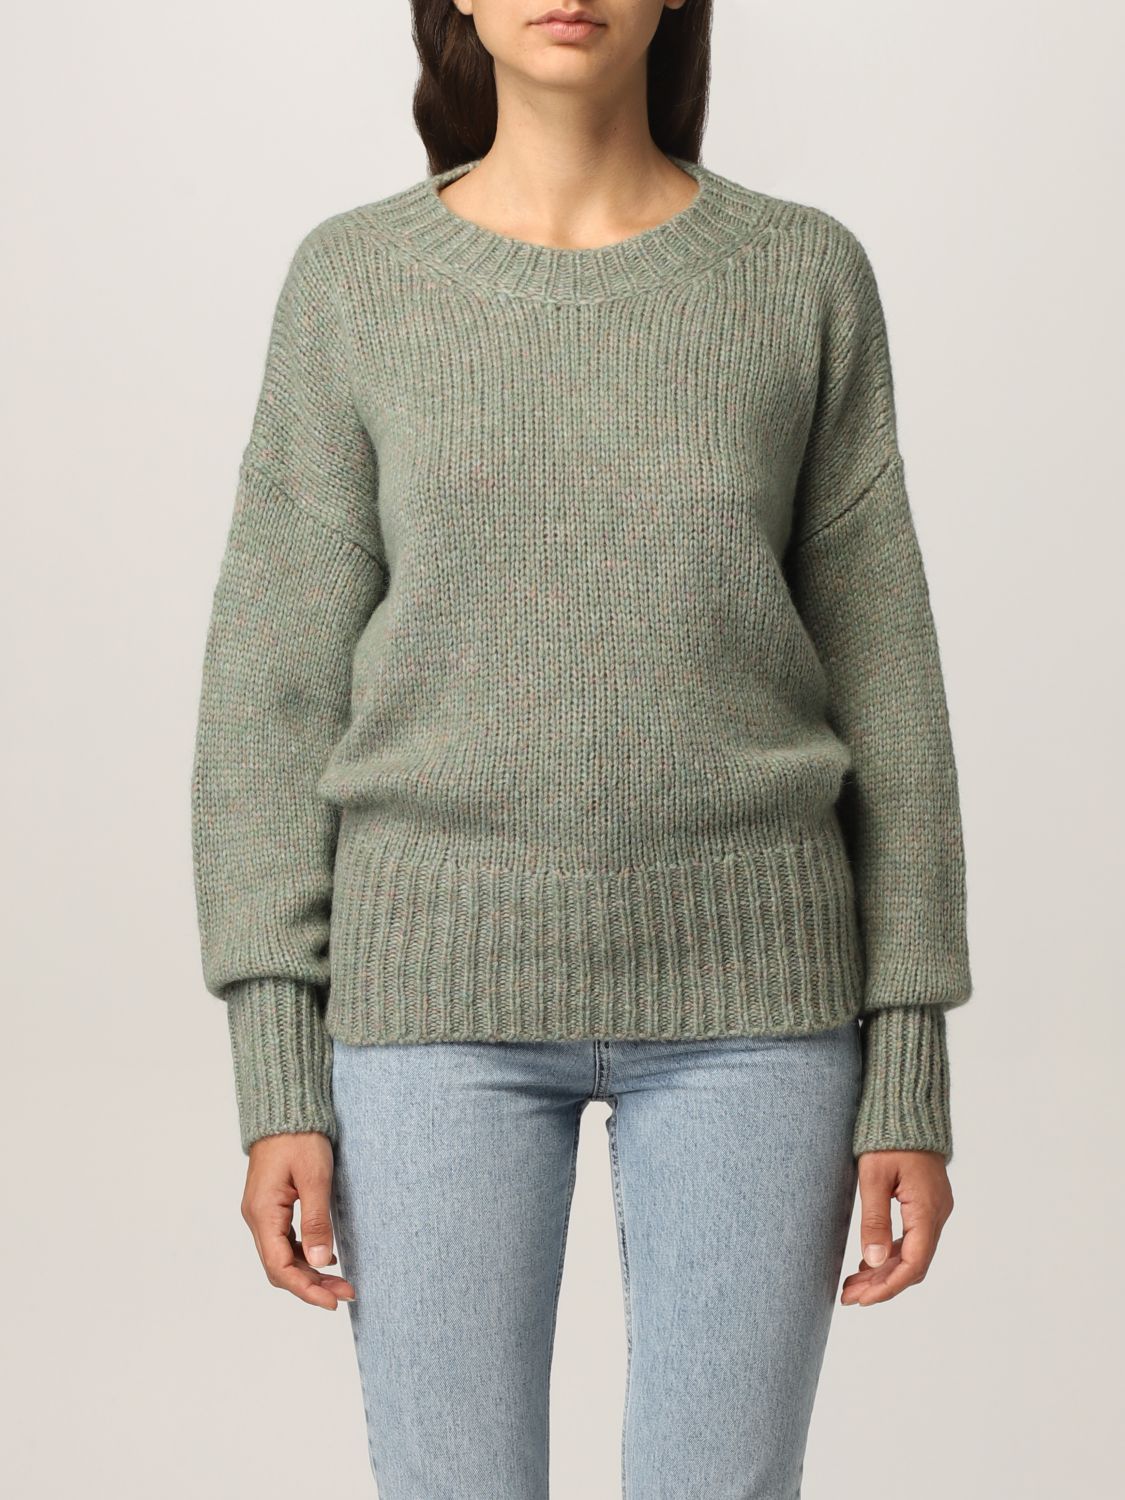 ISABEL MARANT: Sweater women | Sweater Marant Women Green | Marant GIGLIO.COM